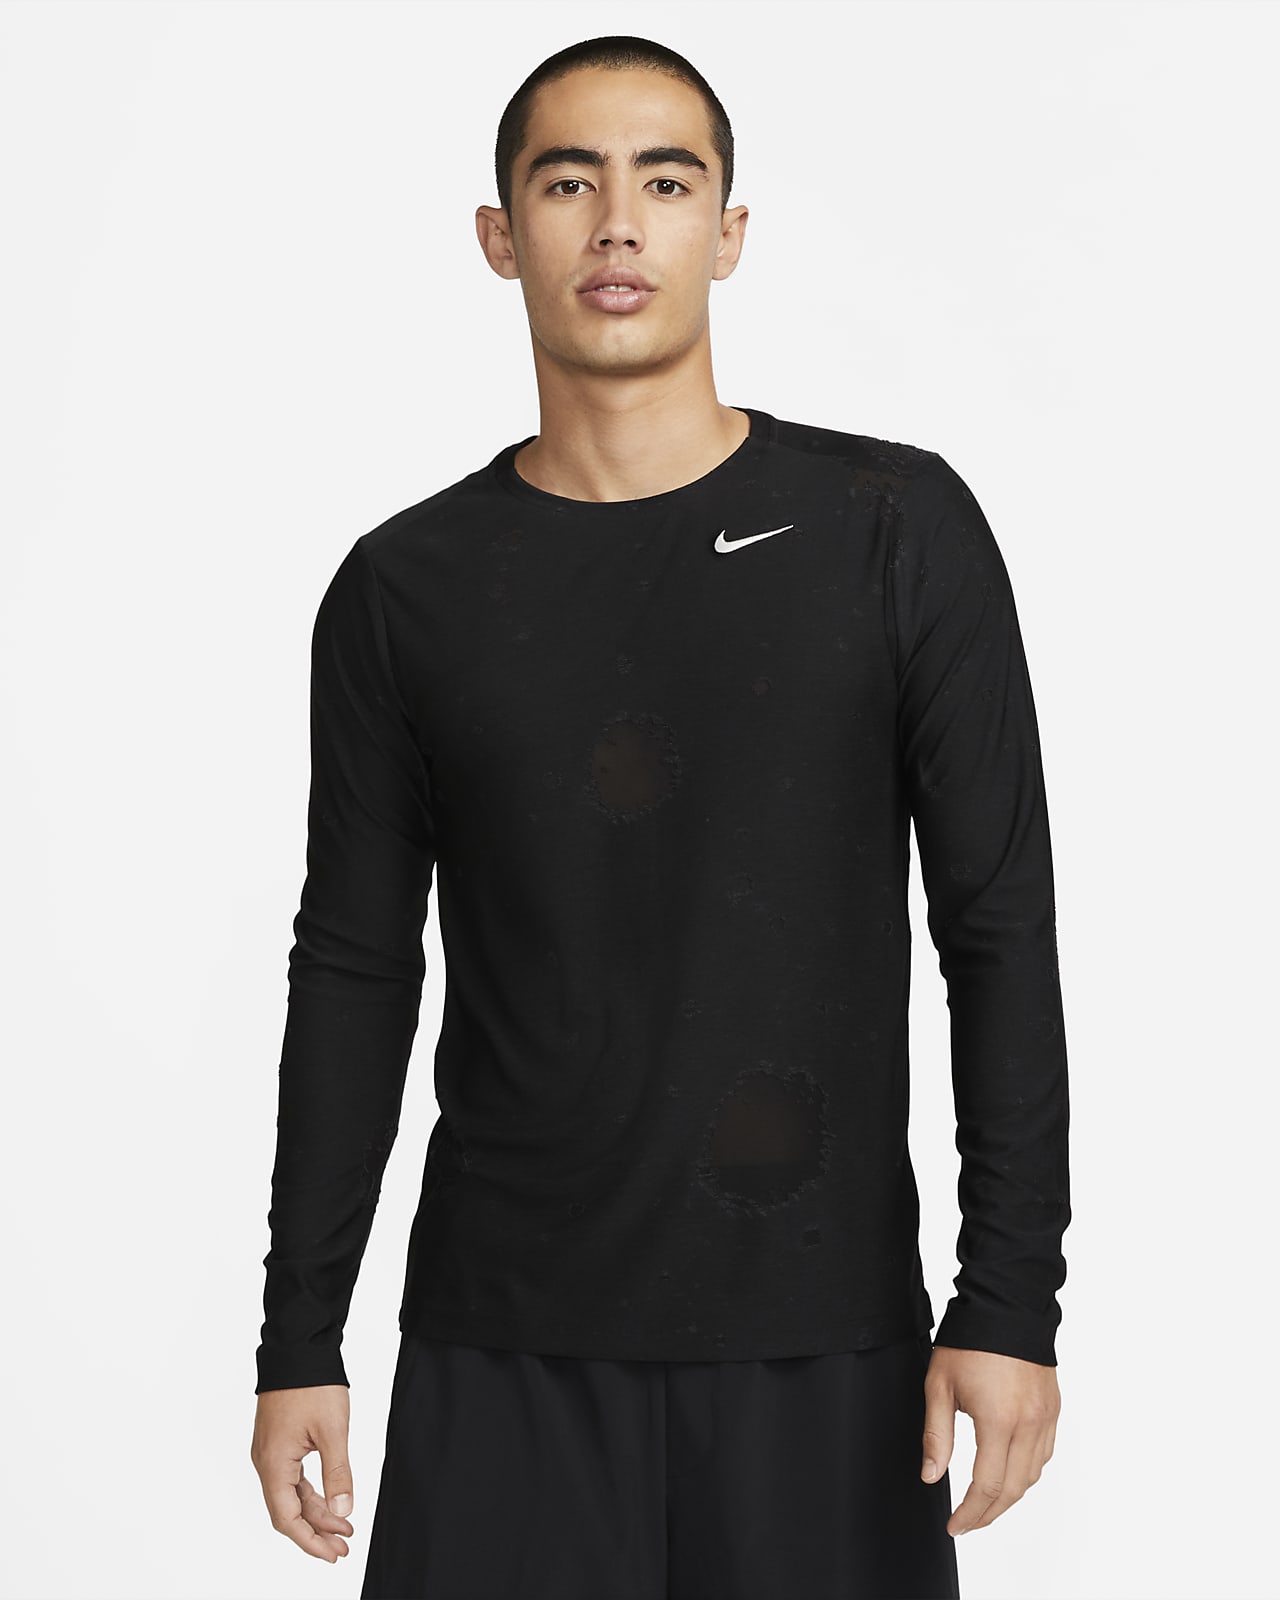 Skyldfølelse sti cirkulation Nike Dri-FIT Men's Long-Sleeve Allover Print Fitness Top. Nike JP